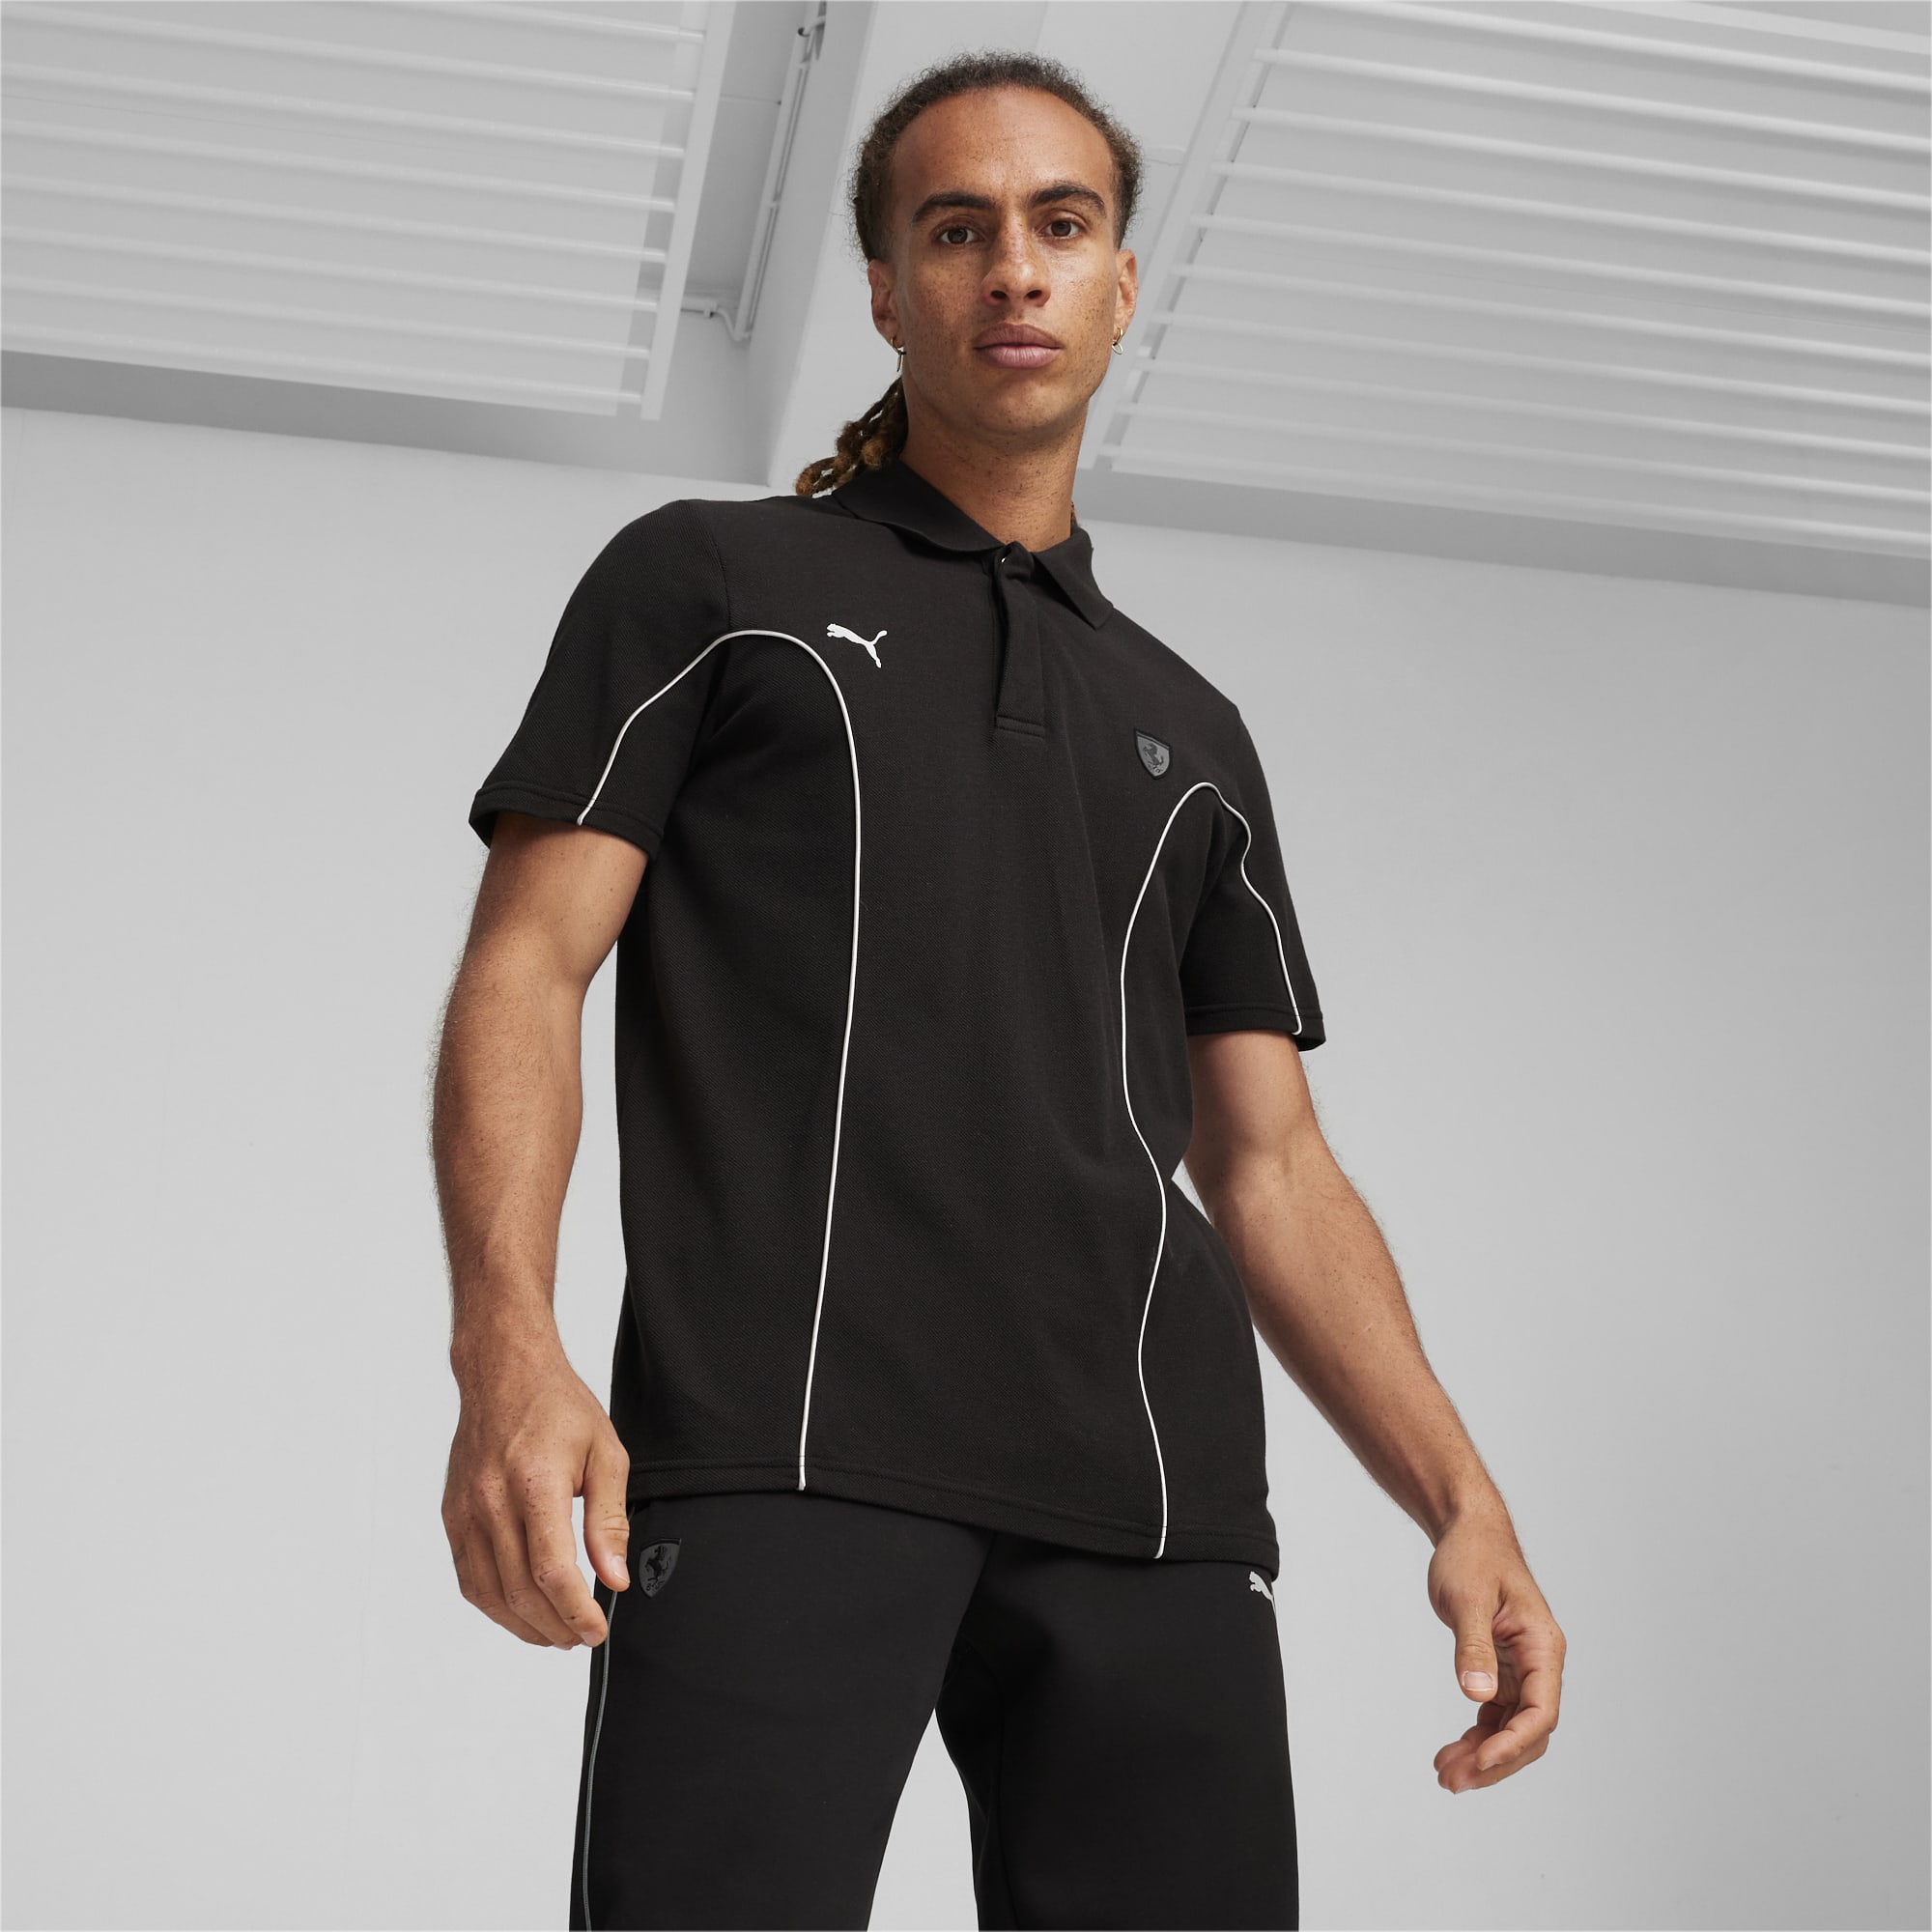 PUMA Scuderia Ferrari Style Men's Motorsport Polo Shirt, Black, Size XS, Clothing